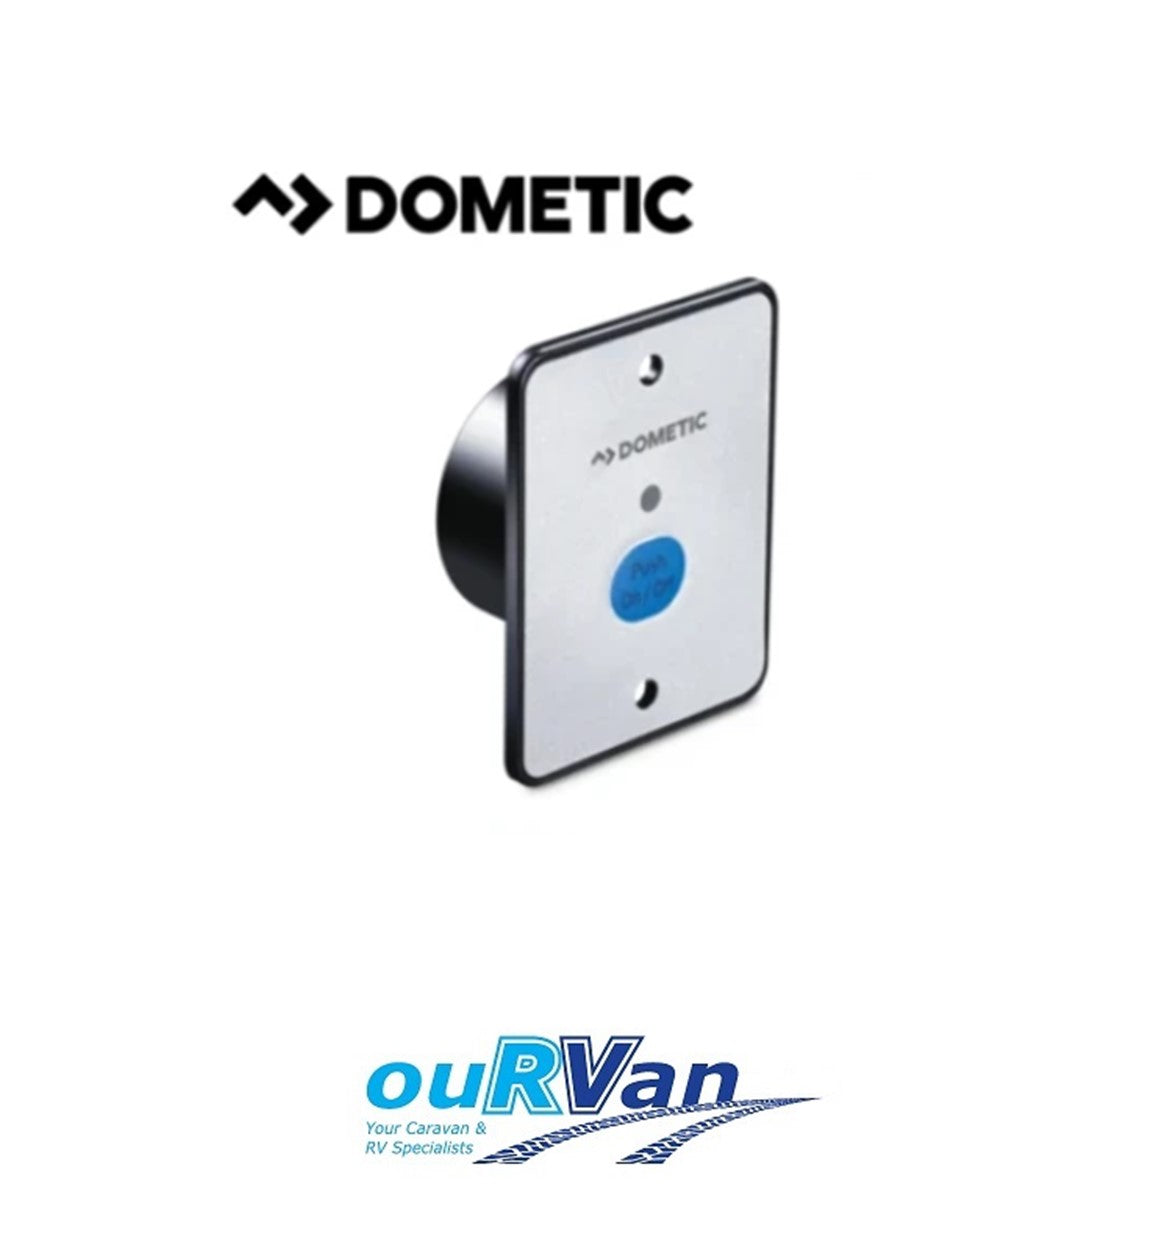 Dometic Sinepower Mcr-9 Remote Control 9108400853 Inverter Caravan